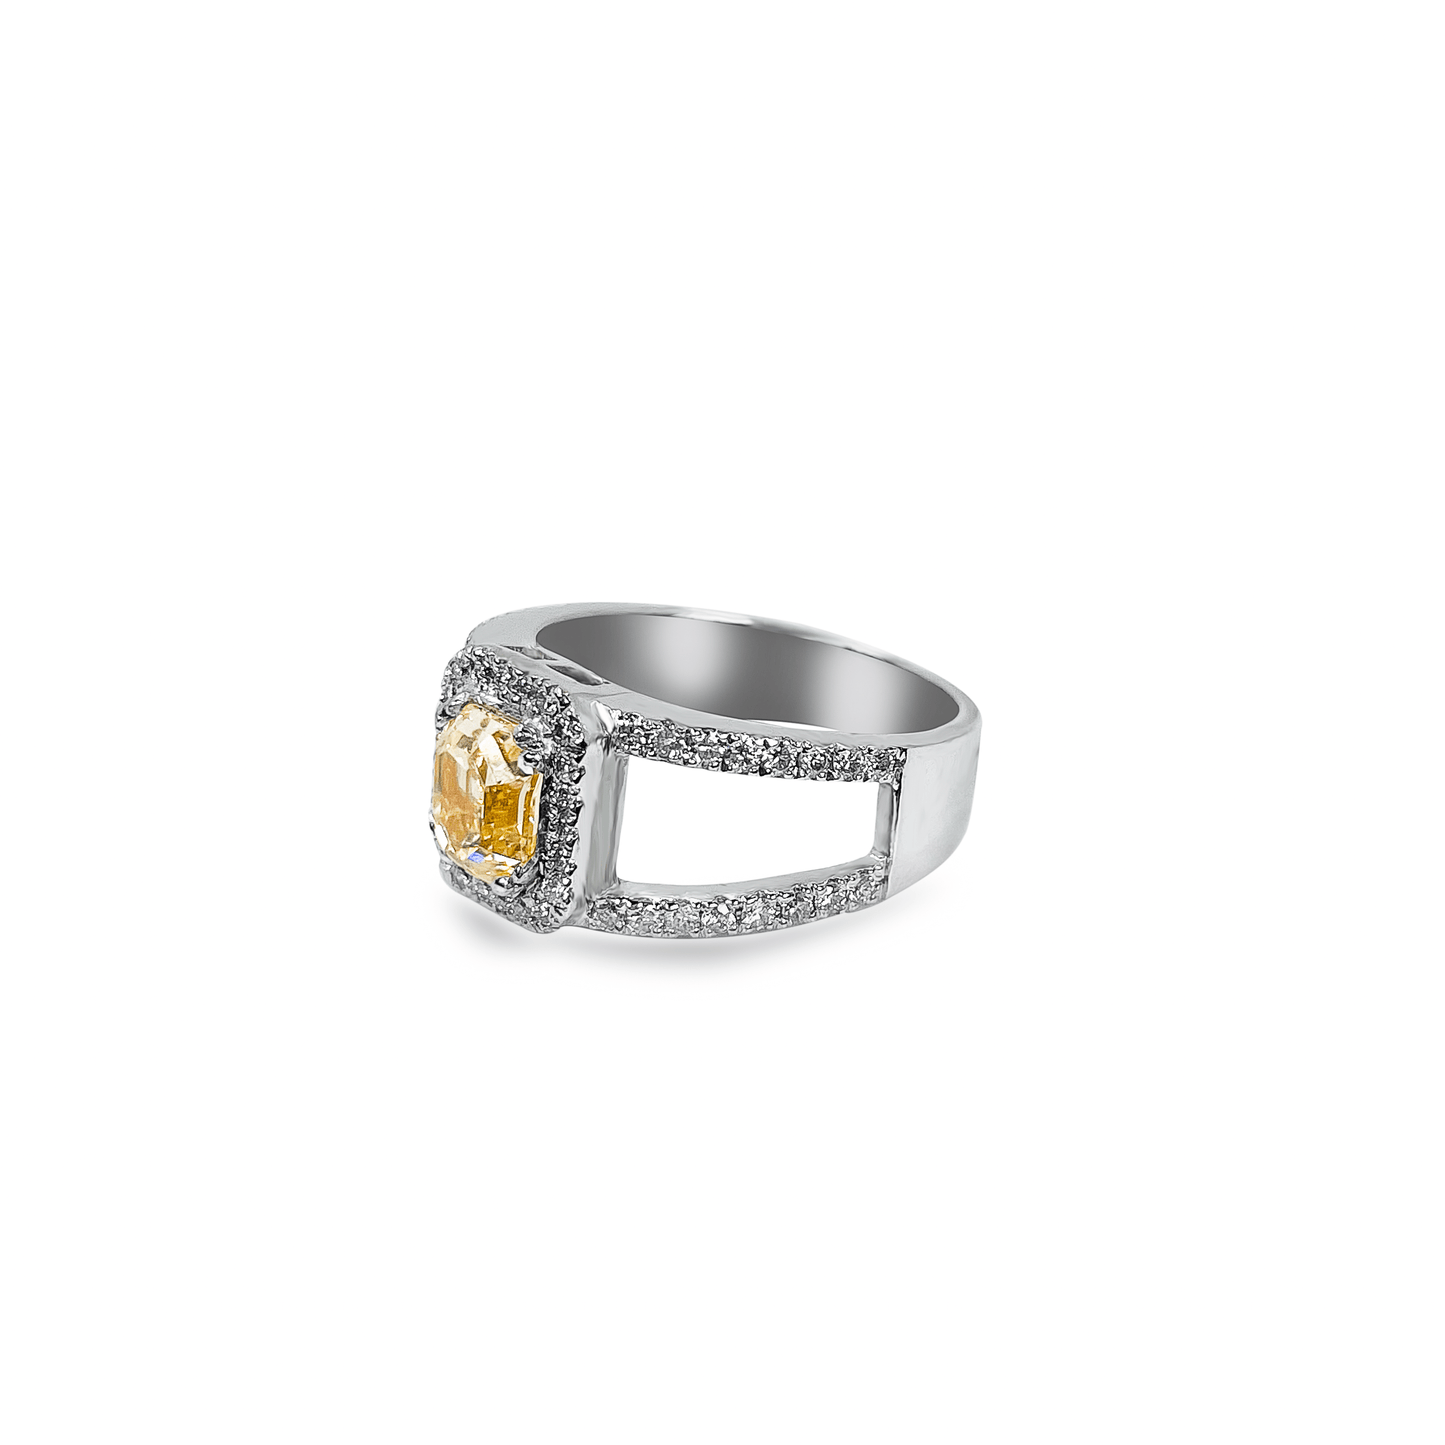 1.16ct Fancy Light Yellow Emerald Cut Diamond With Diamond Halo in 18k White Gold- جرس - Luxury Diamond Jewelry shop Dubai - SABA DIAMONDS